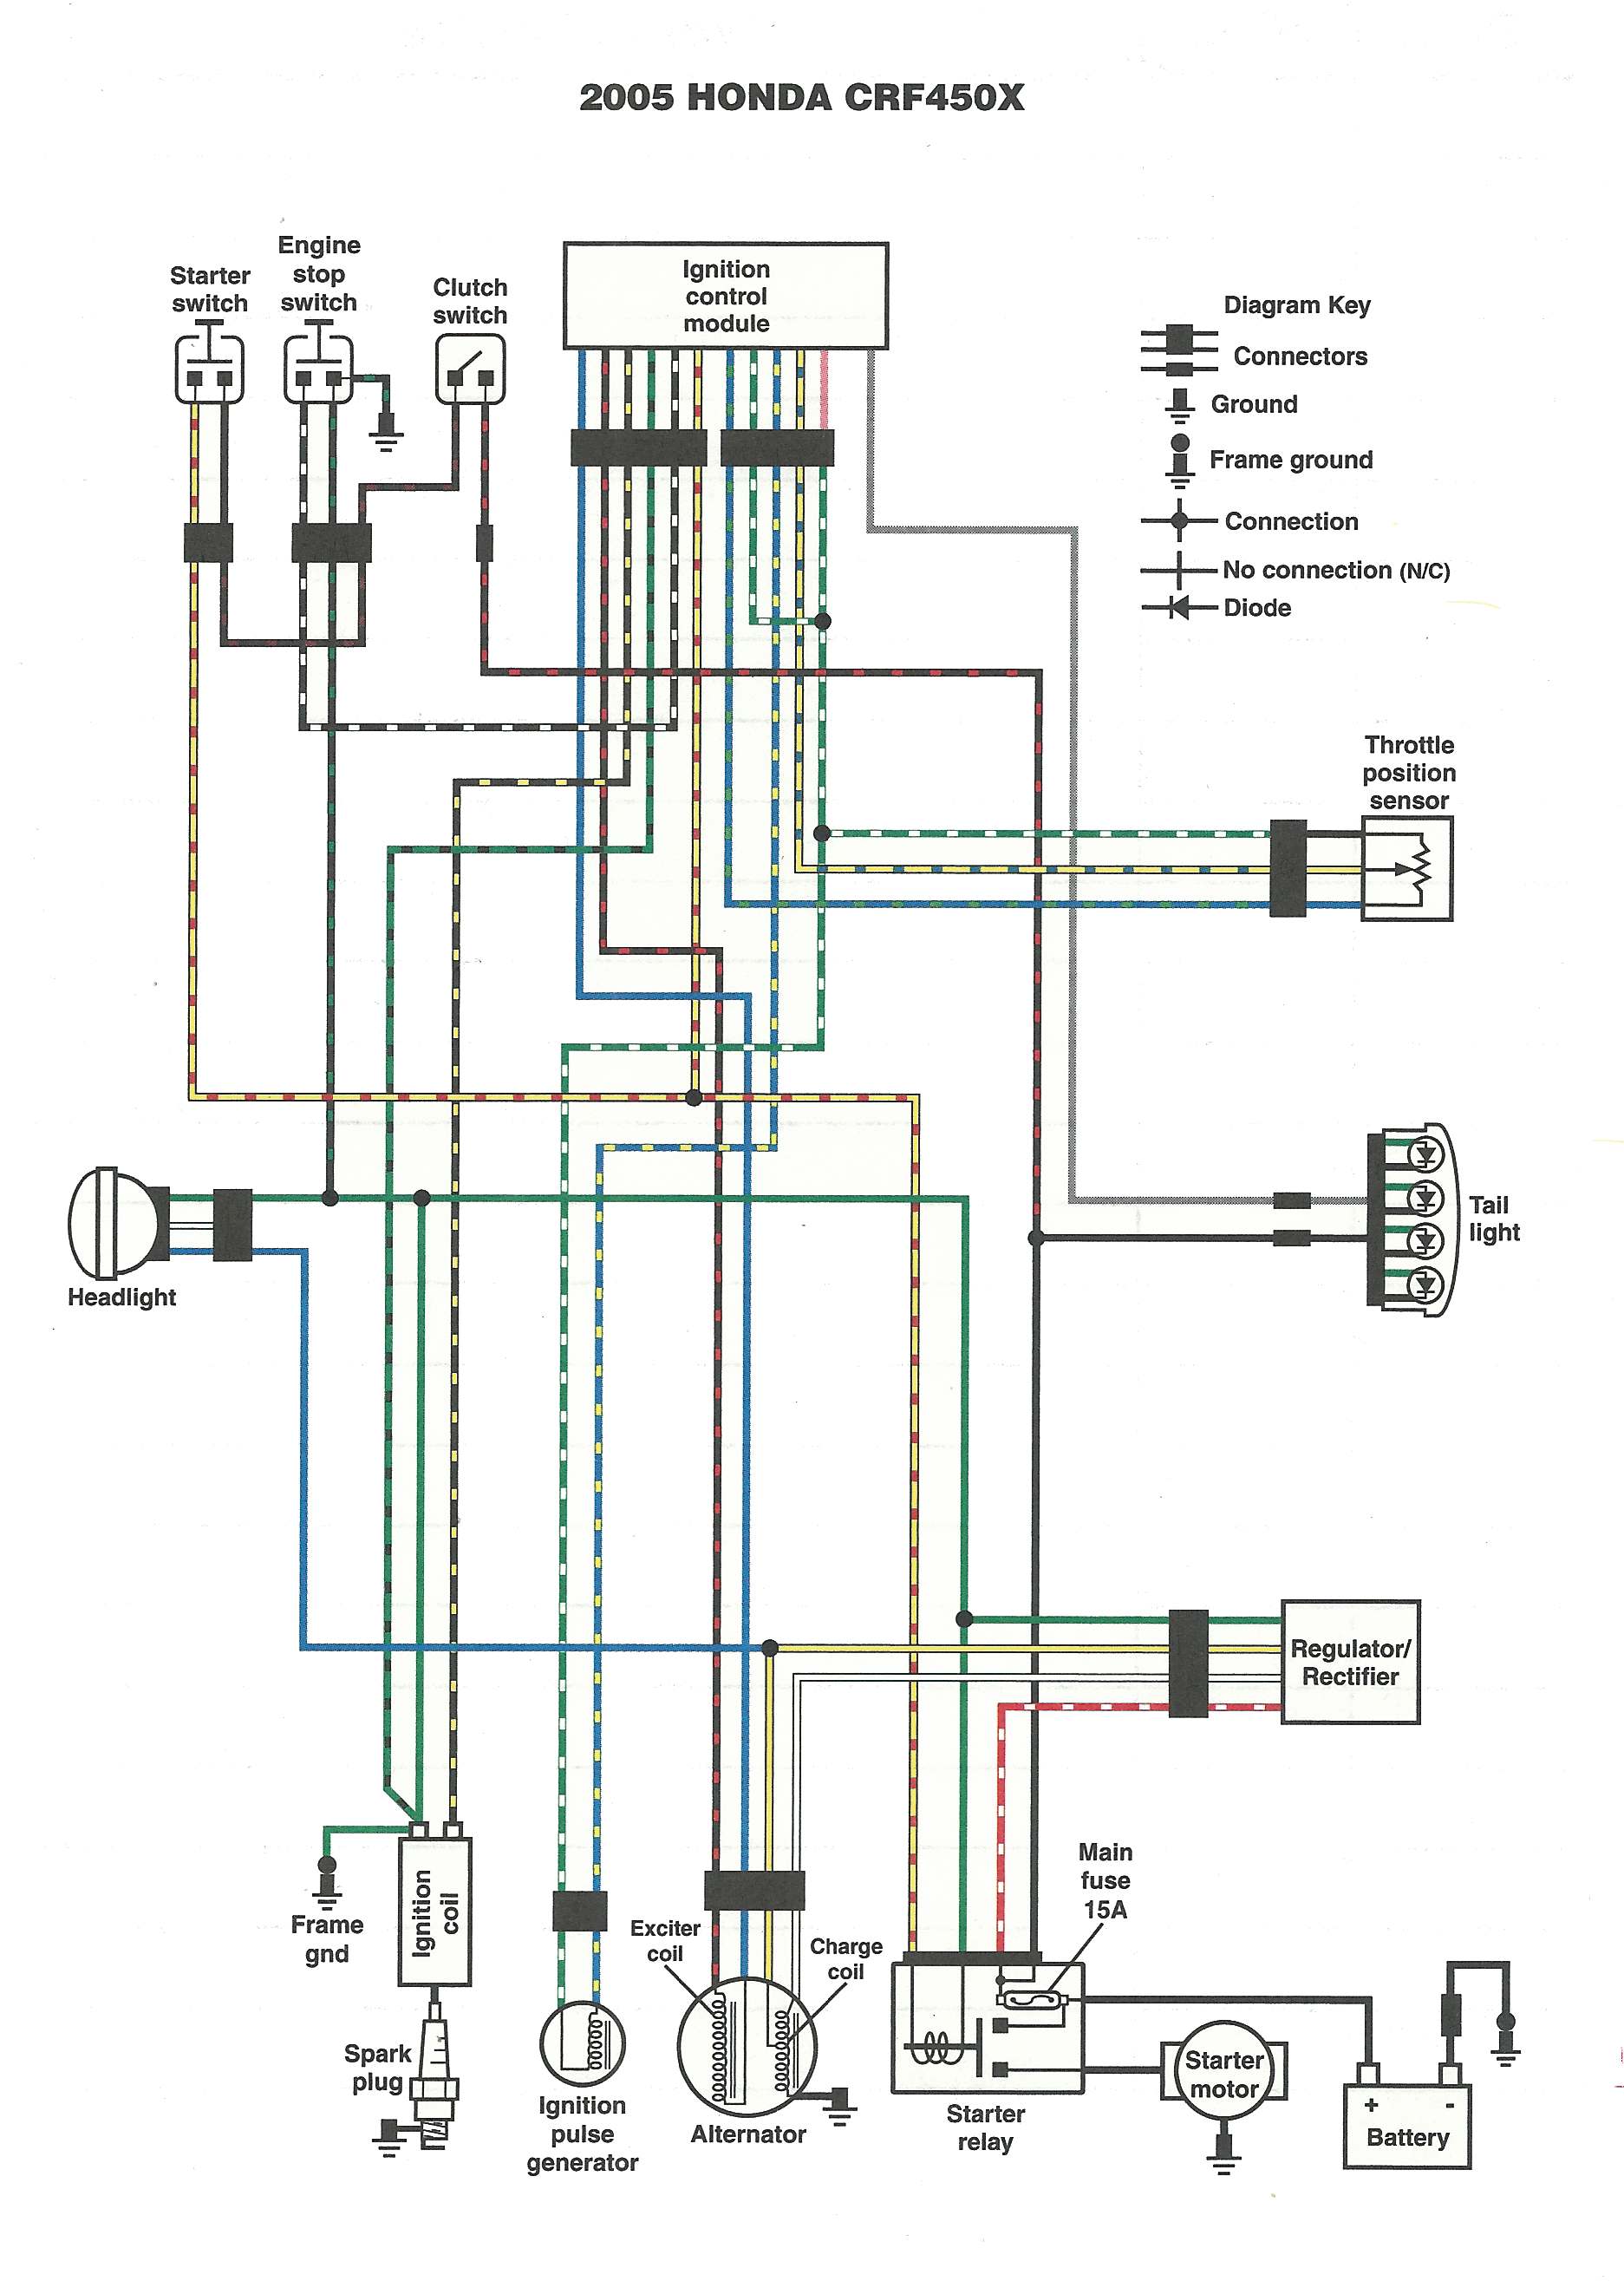 Diagram M8000 Wiring Diagram Full Version Hd Quality Wiring Diagram Reviewdiagram Musicadoc It